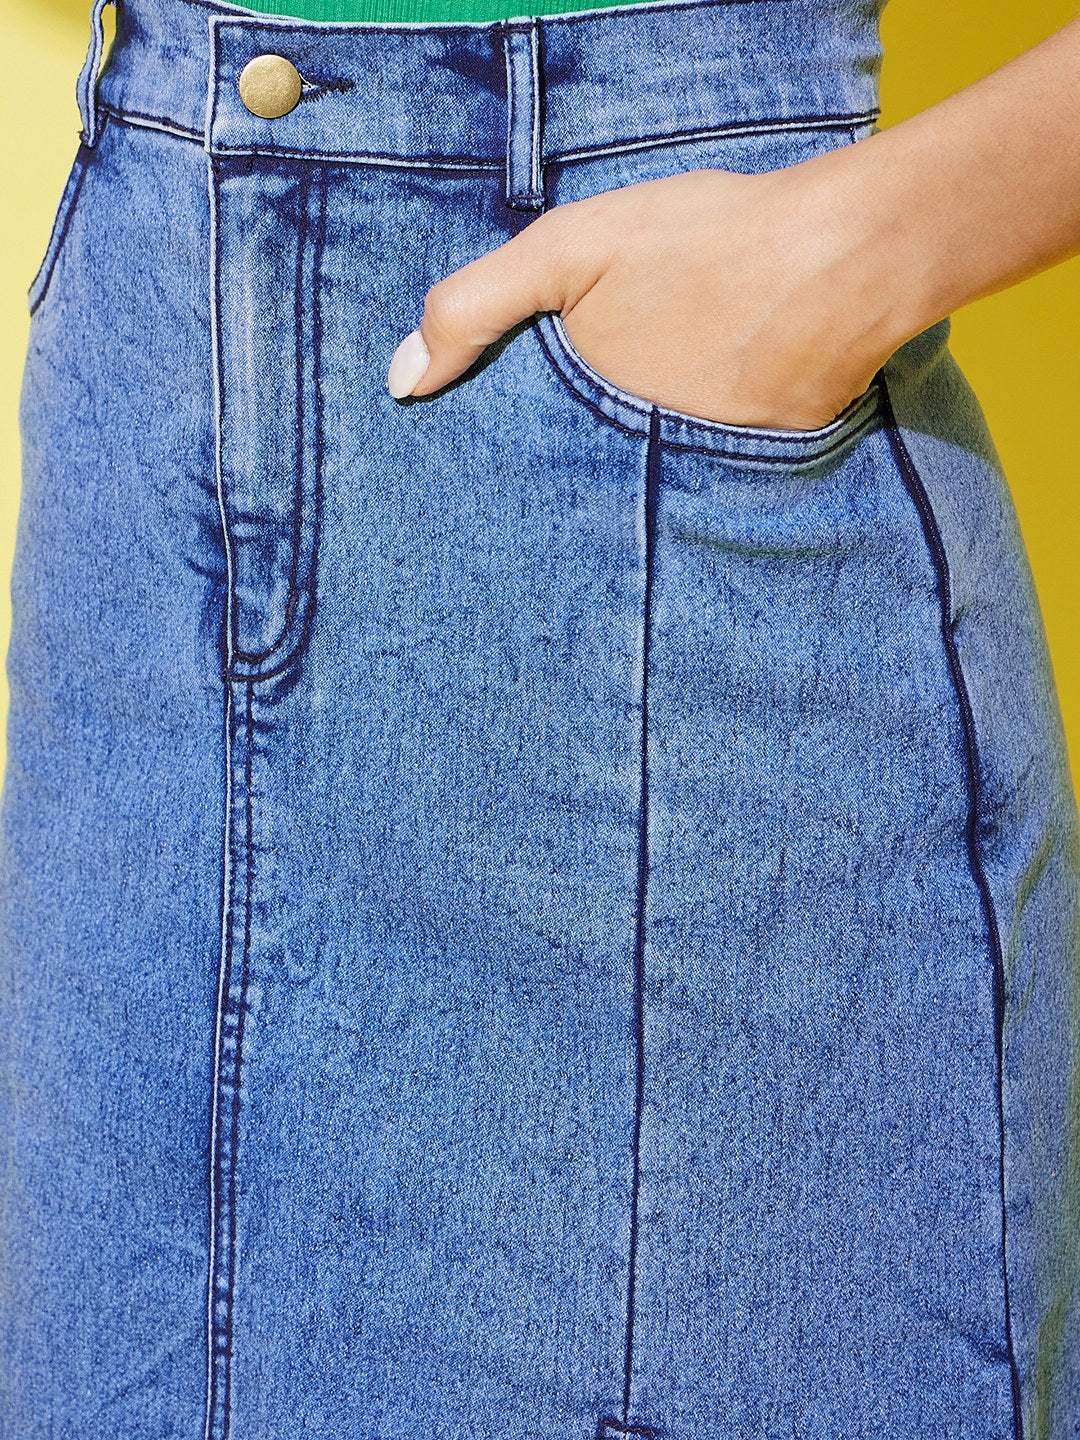 StyleStone Women's Denim Midi Skirt with Side Slit